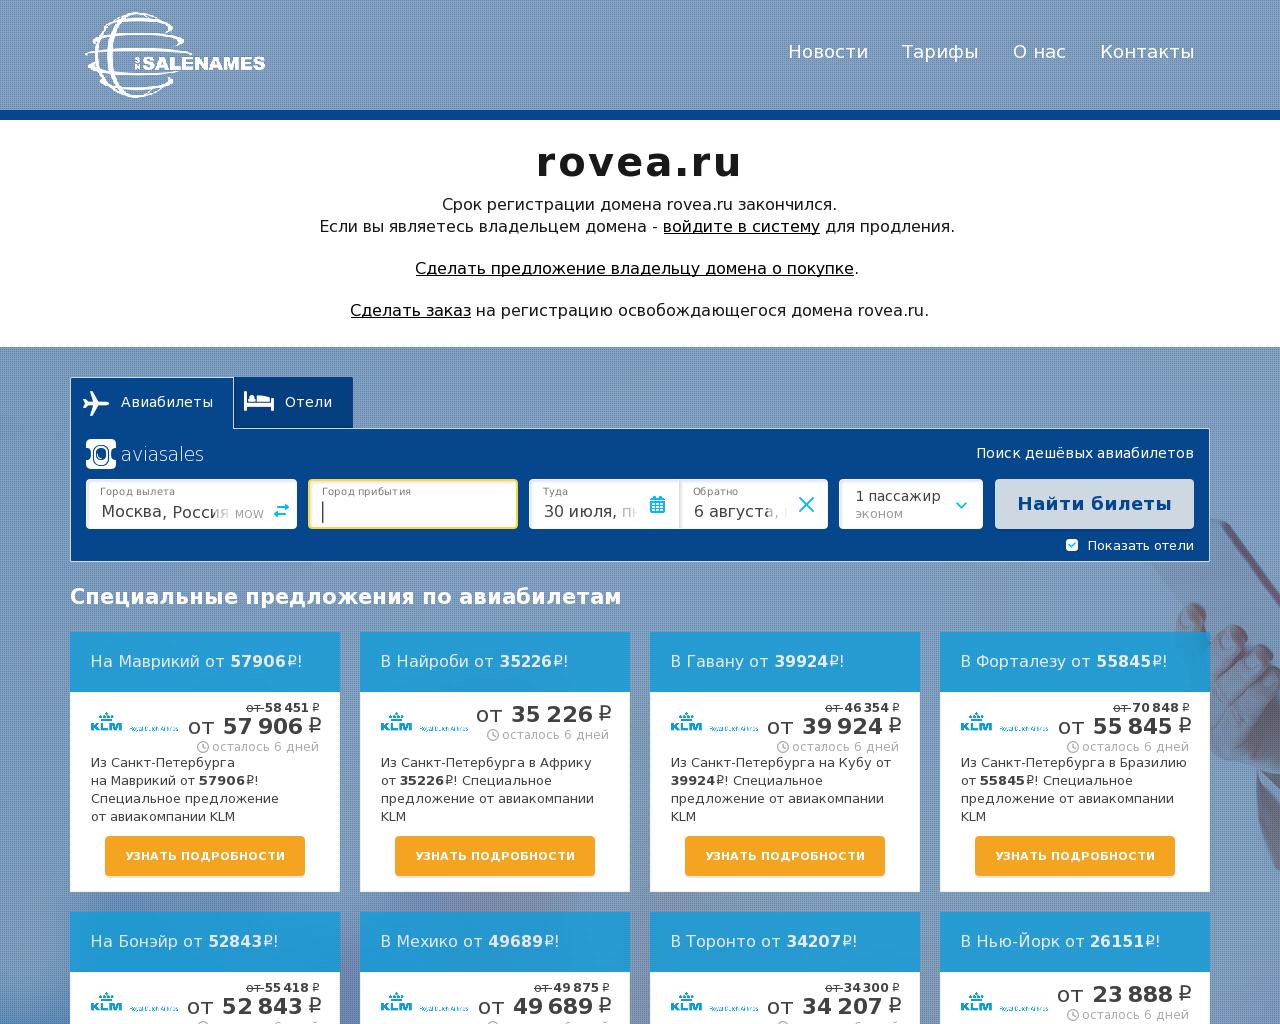 Изображение сайта rovea.ru в разрешении 1280x1024